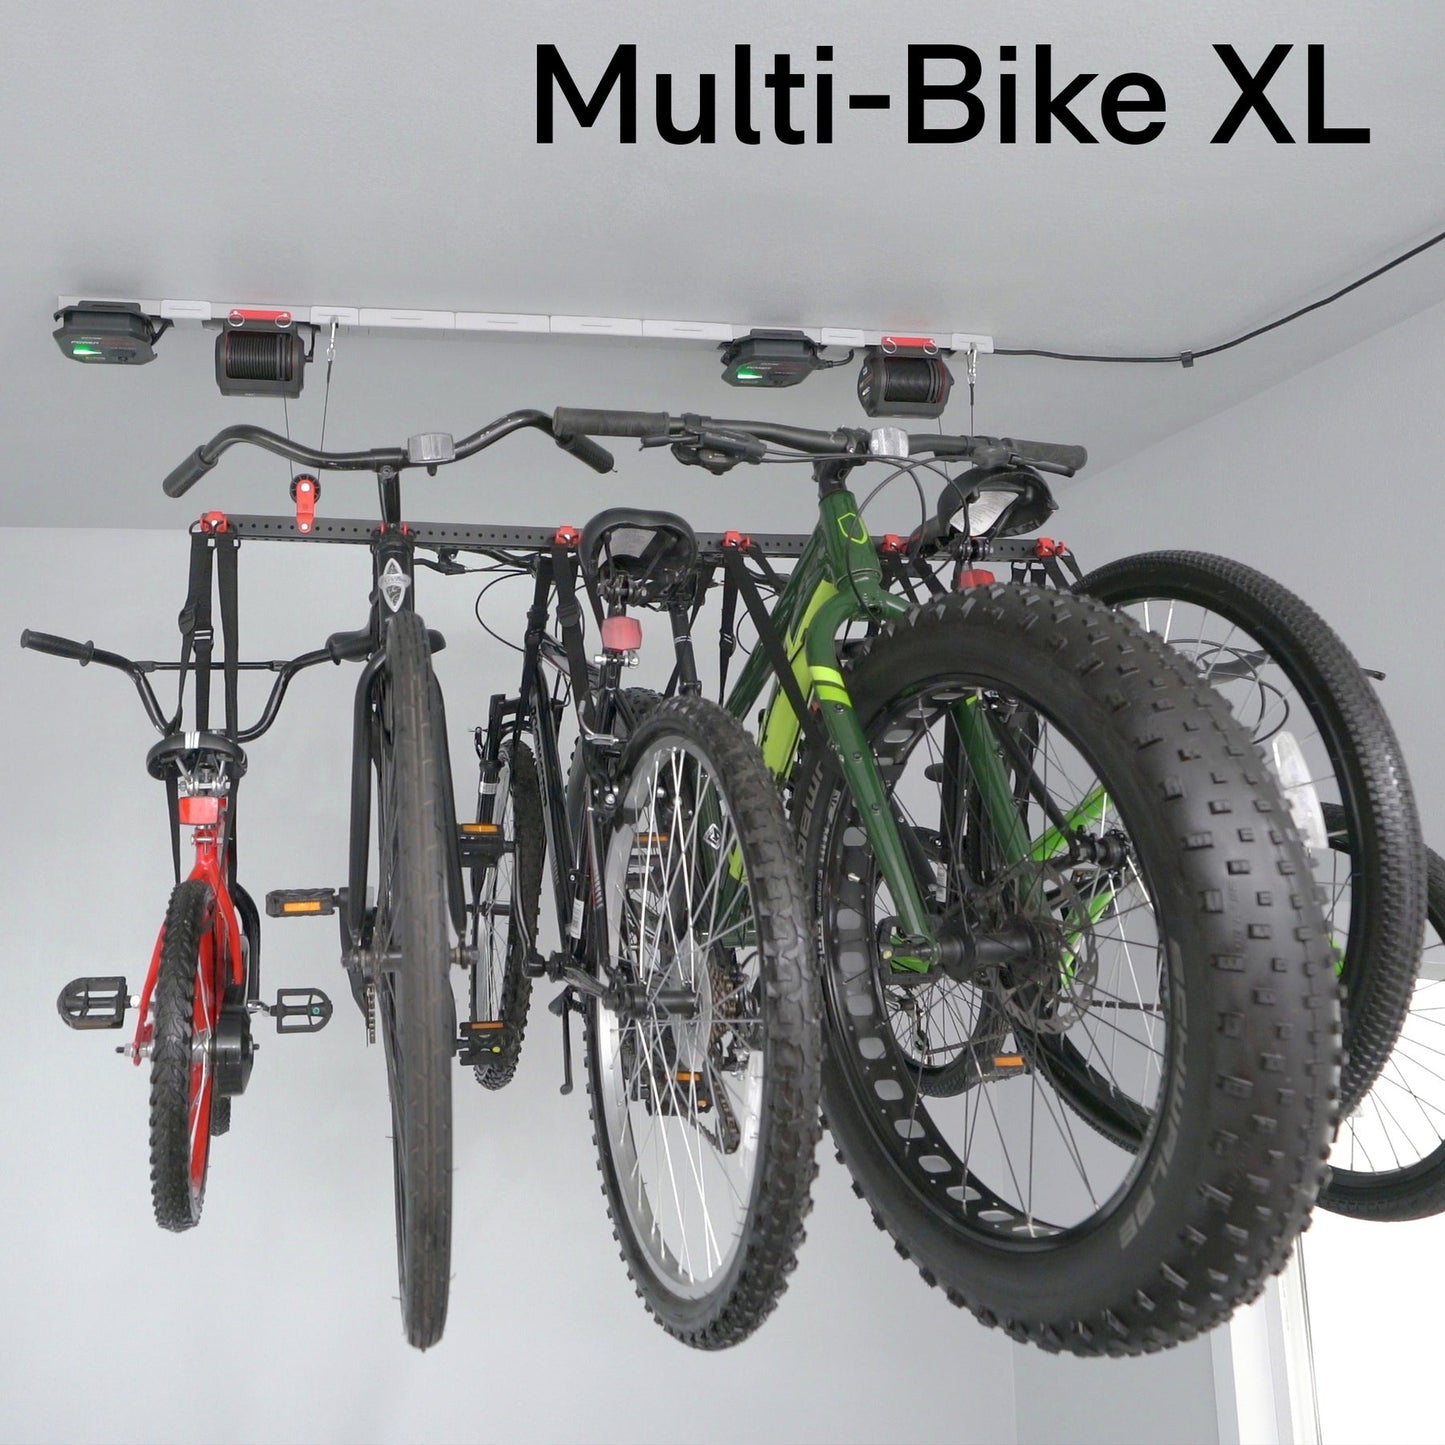 Overhead Storage - Garage Smart Multi-Bike XL Lifter